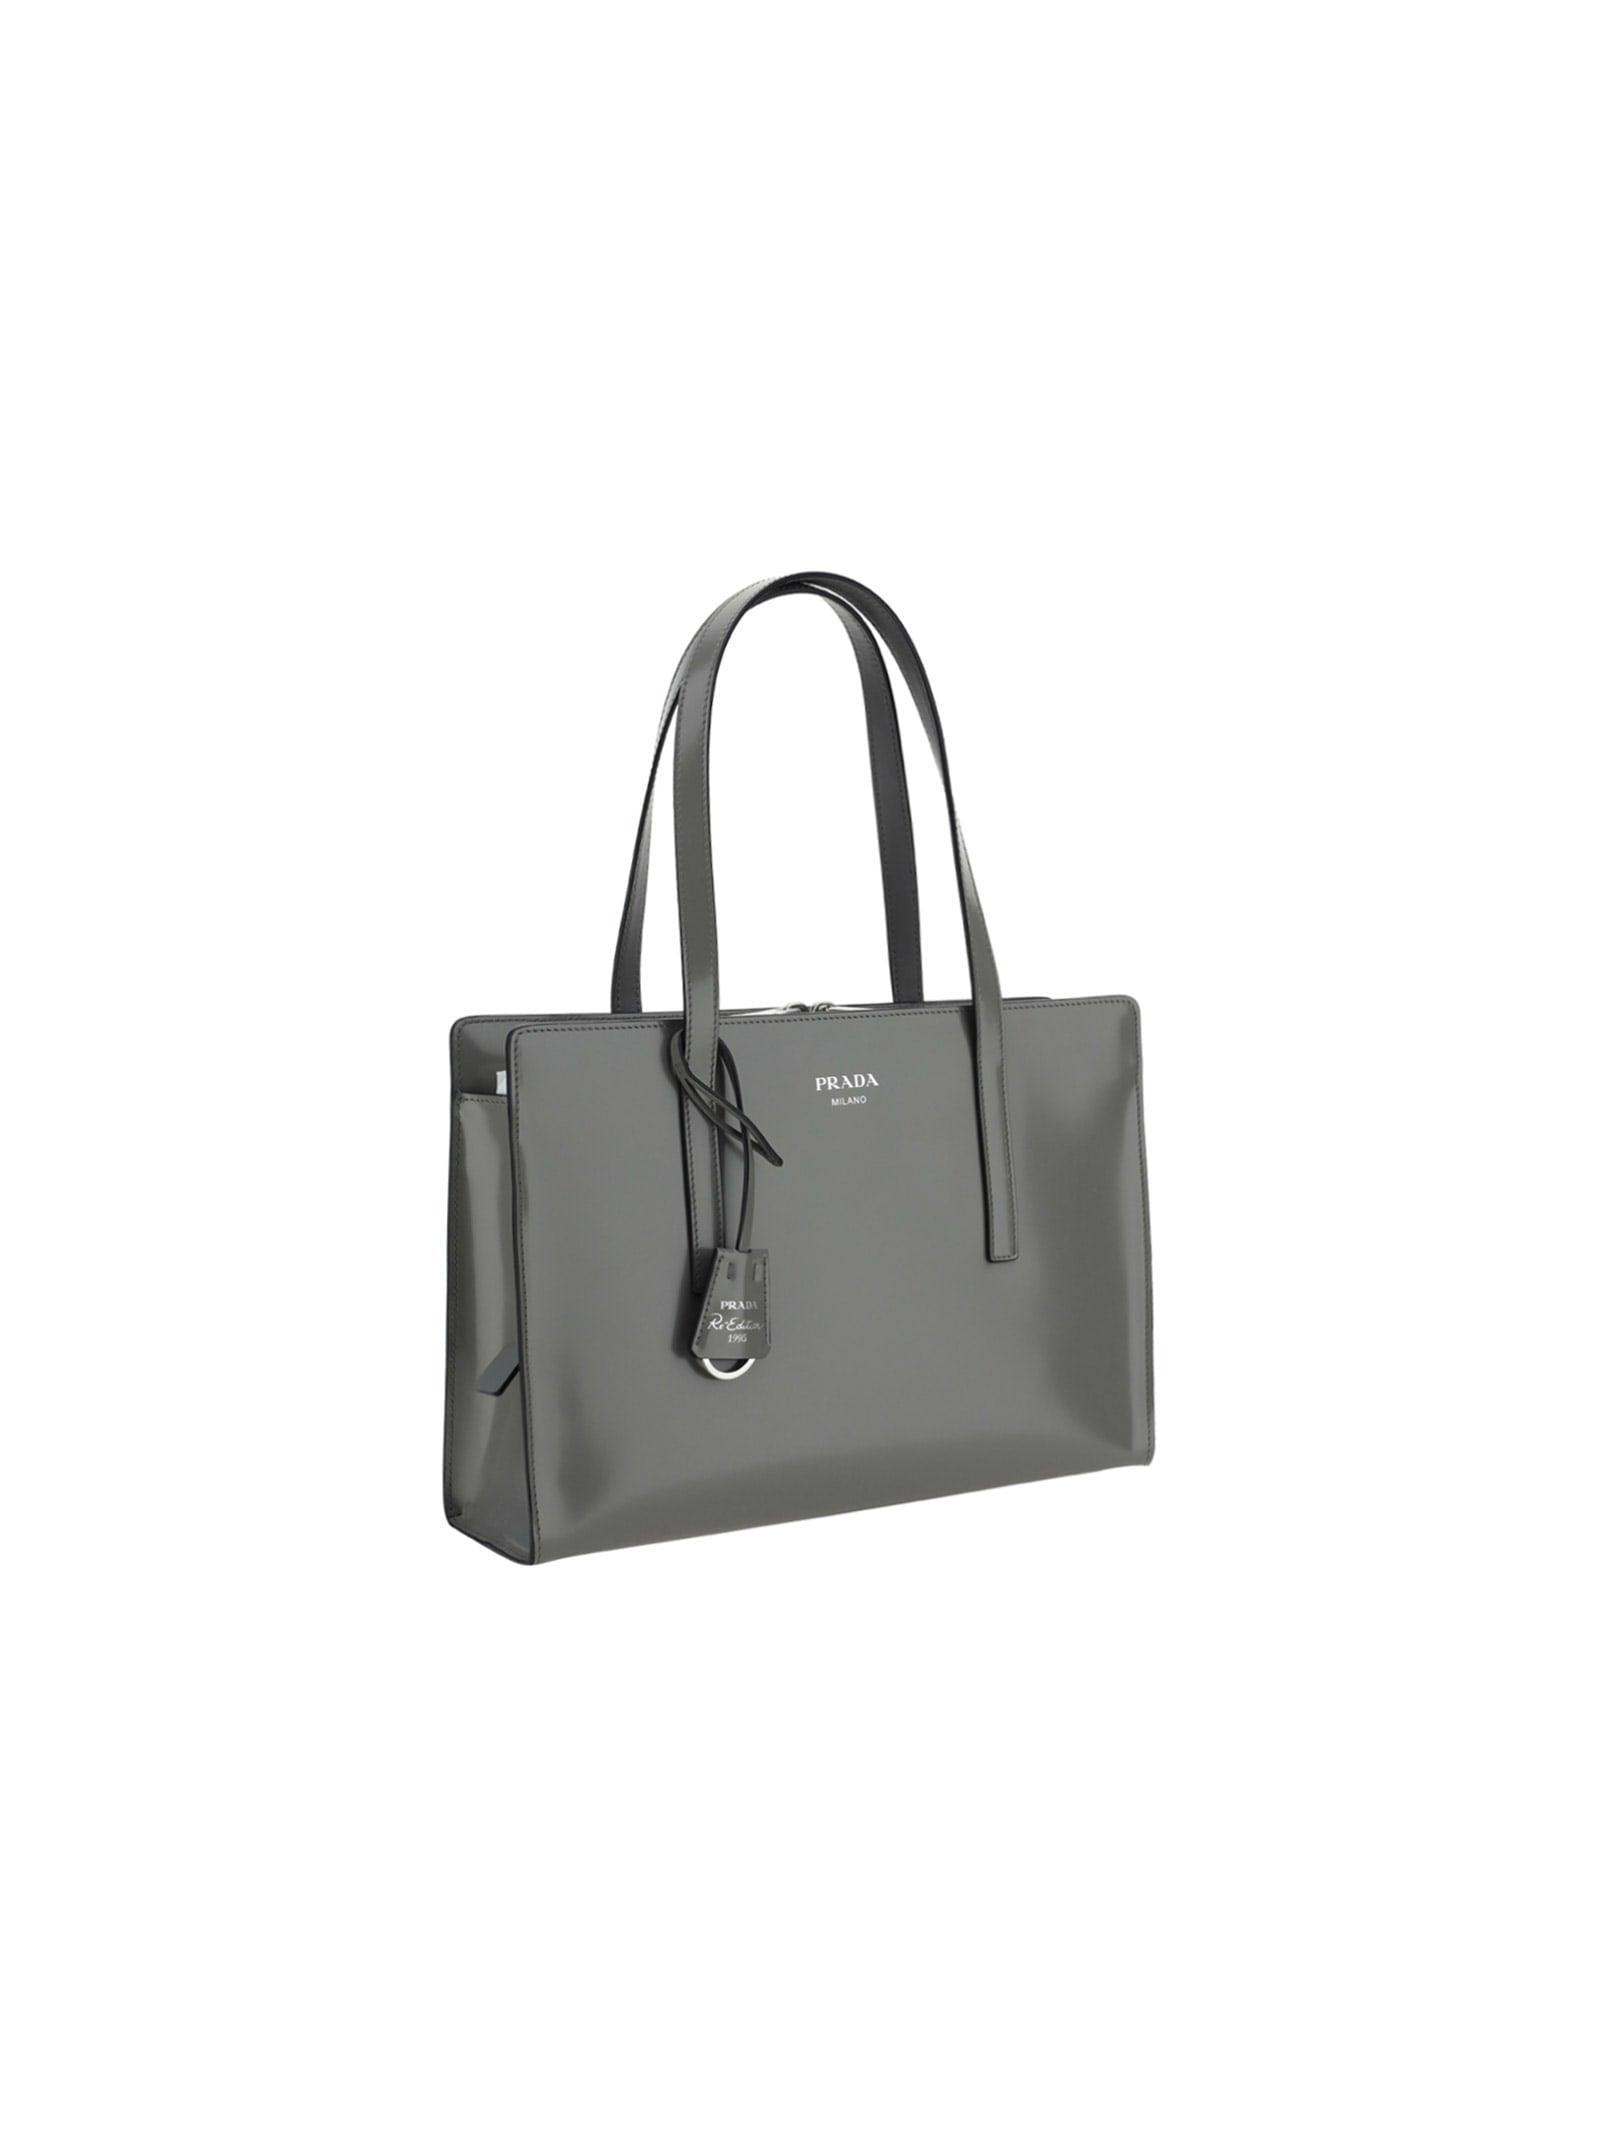 Prada Leather Top Handle Shopper Bag Taupe